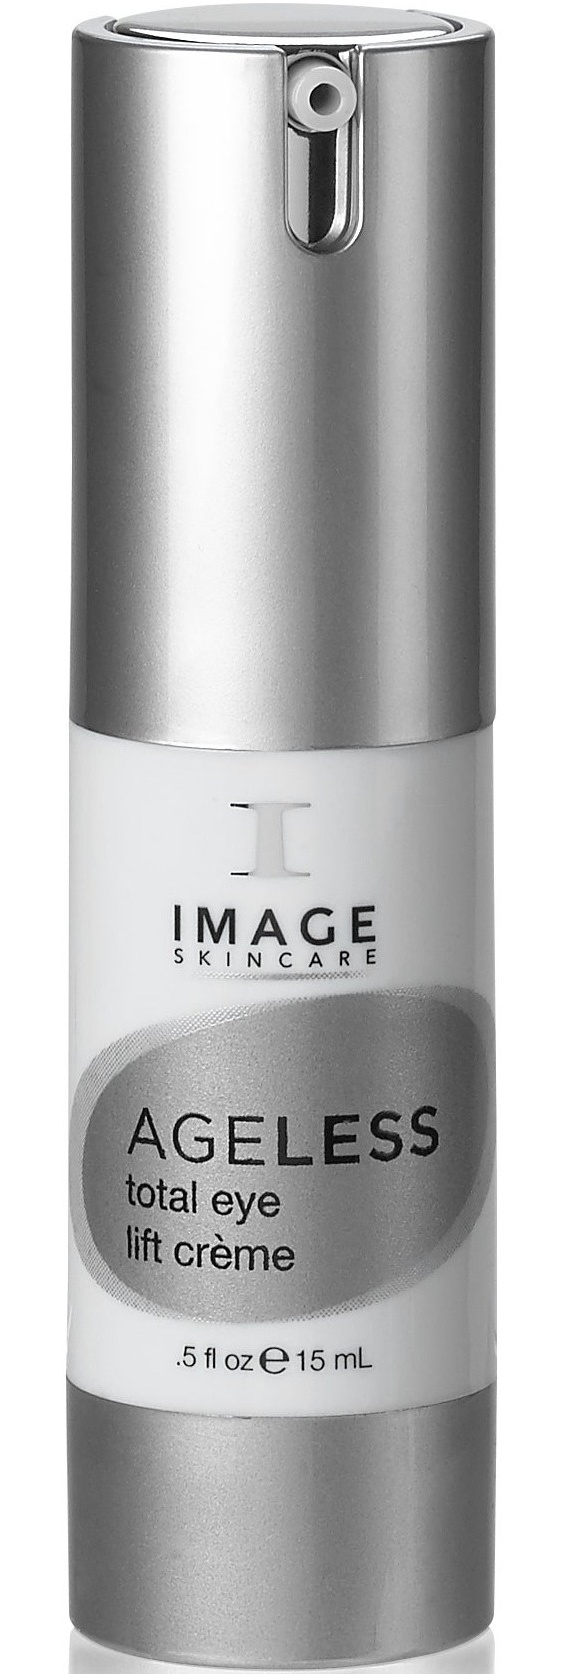 The Image Ageless Total Eye Lift Cream